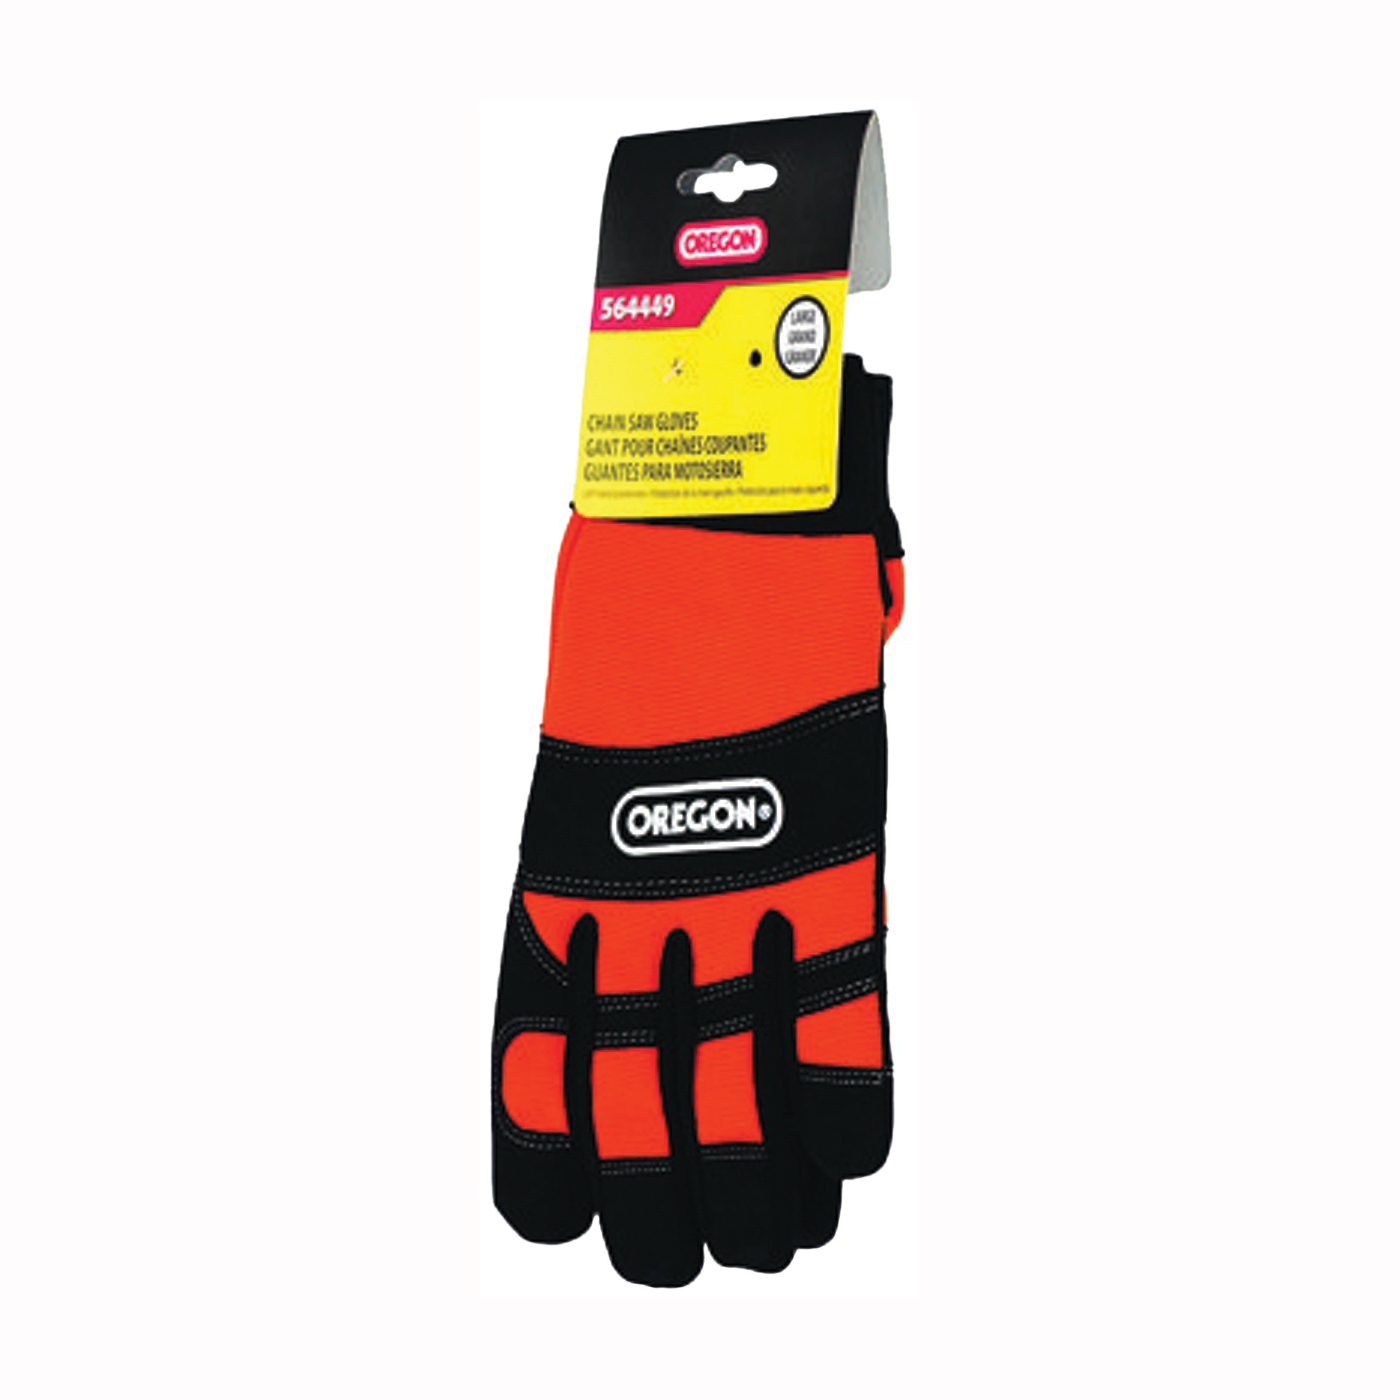 564449 Safety Gloves, L, Knit Wrist Cuff, Leather